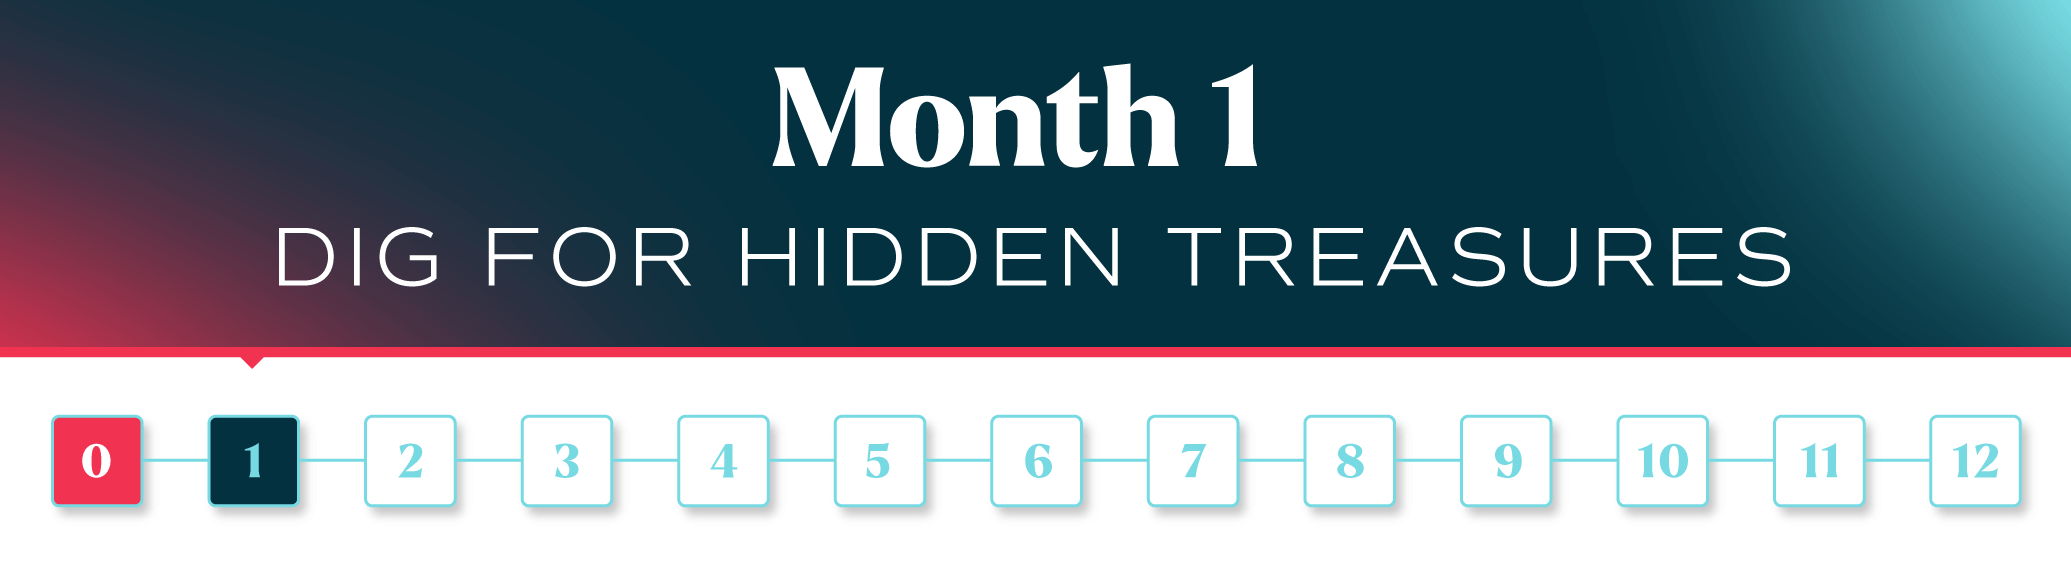 Month 1: Dig for Hidden Treasures